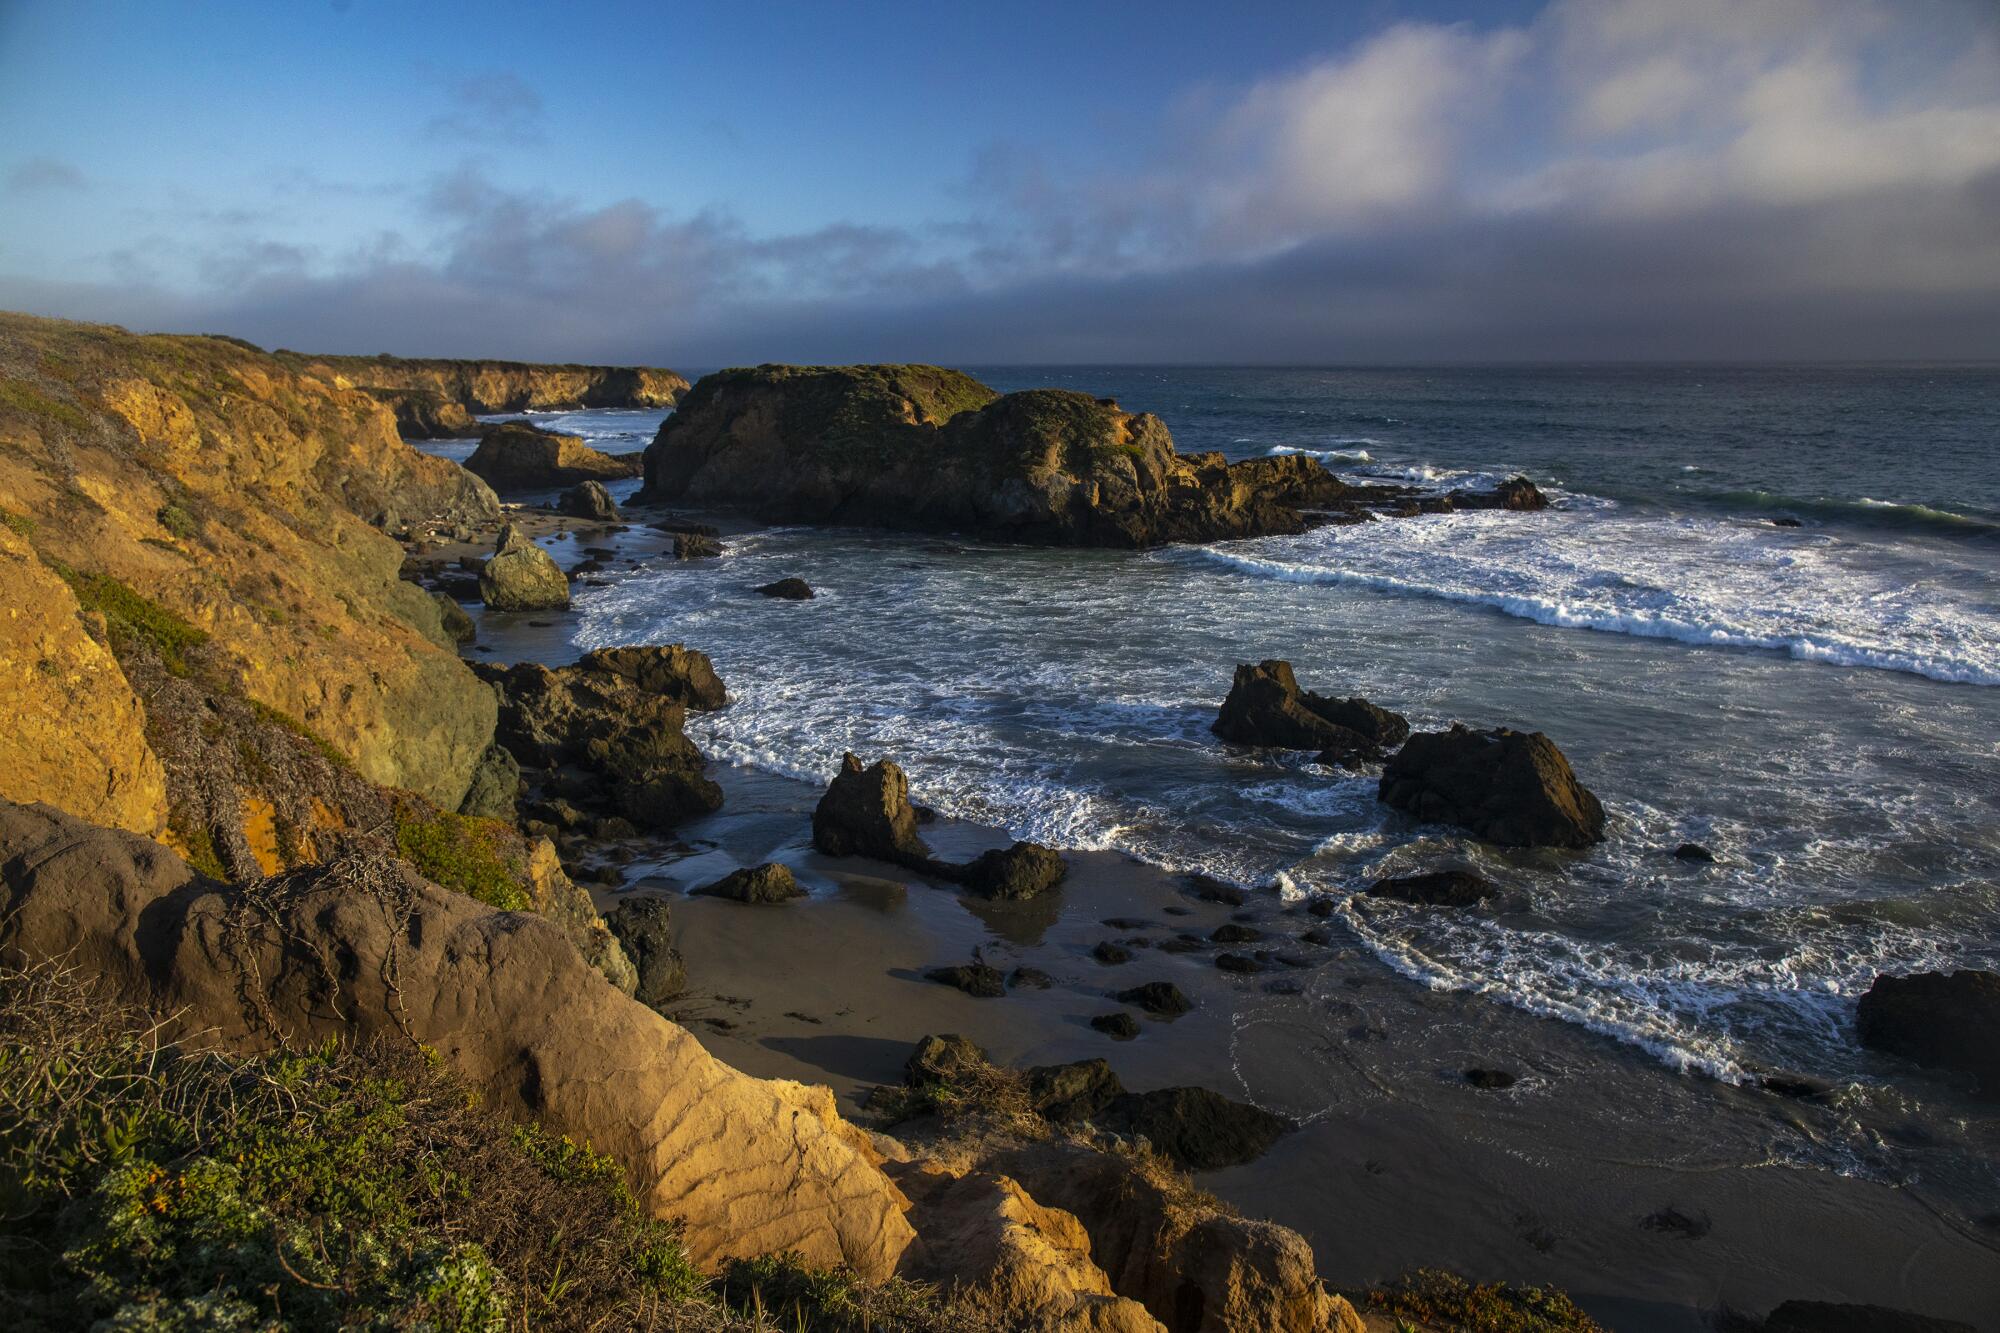 A rocky stretch of coastline and surf.